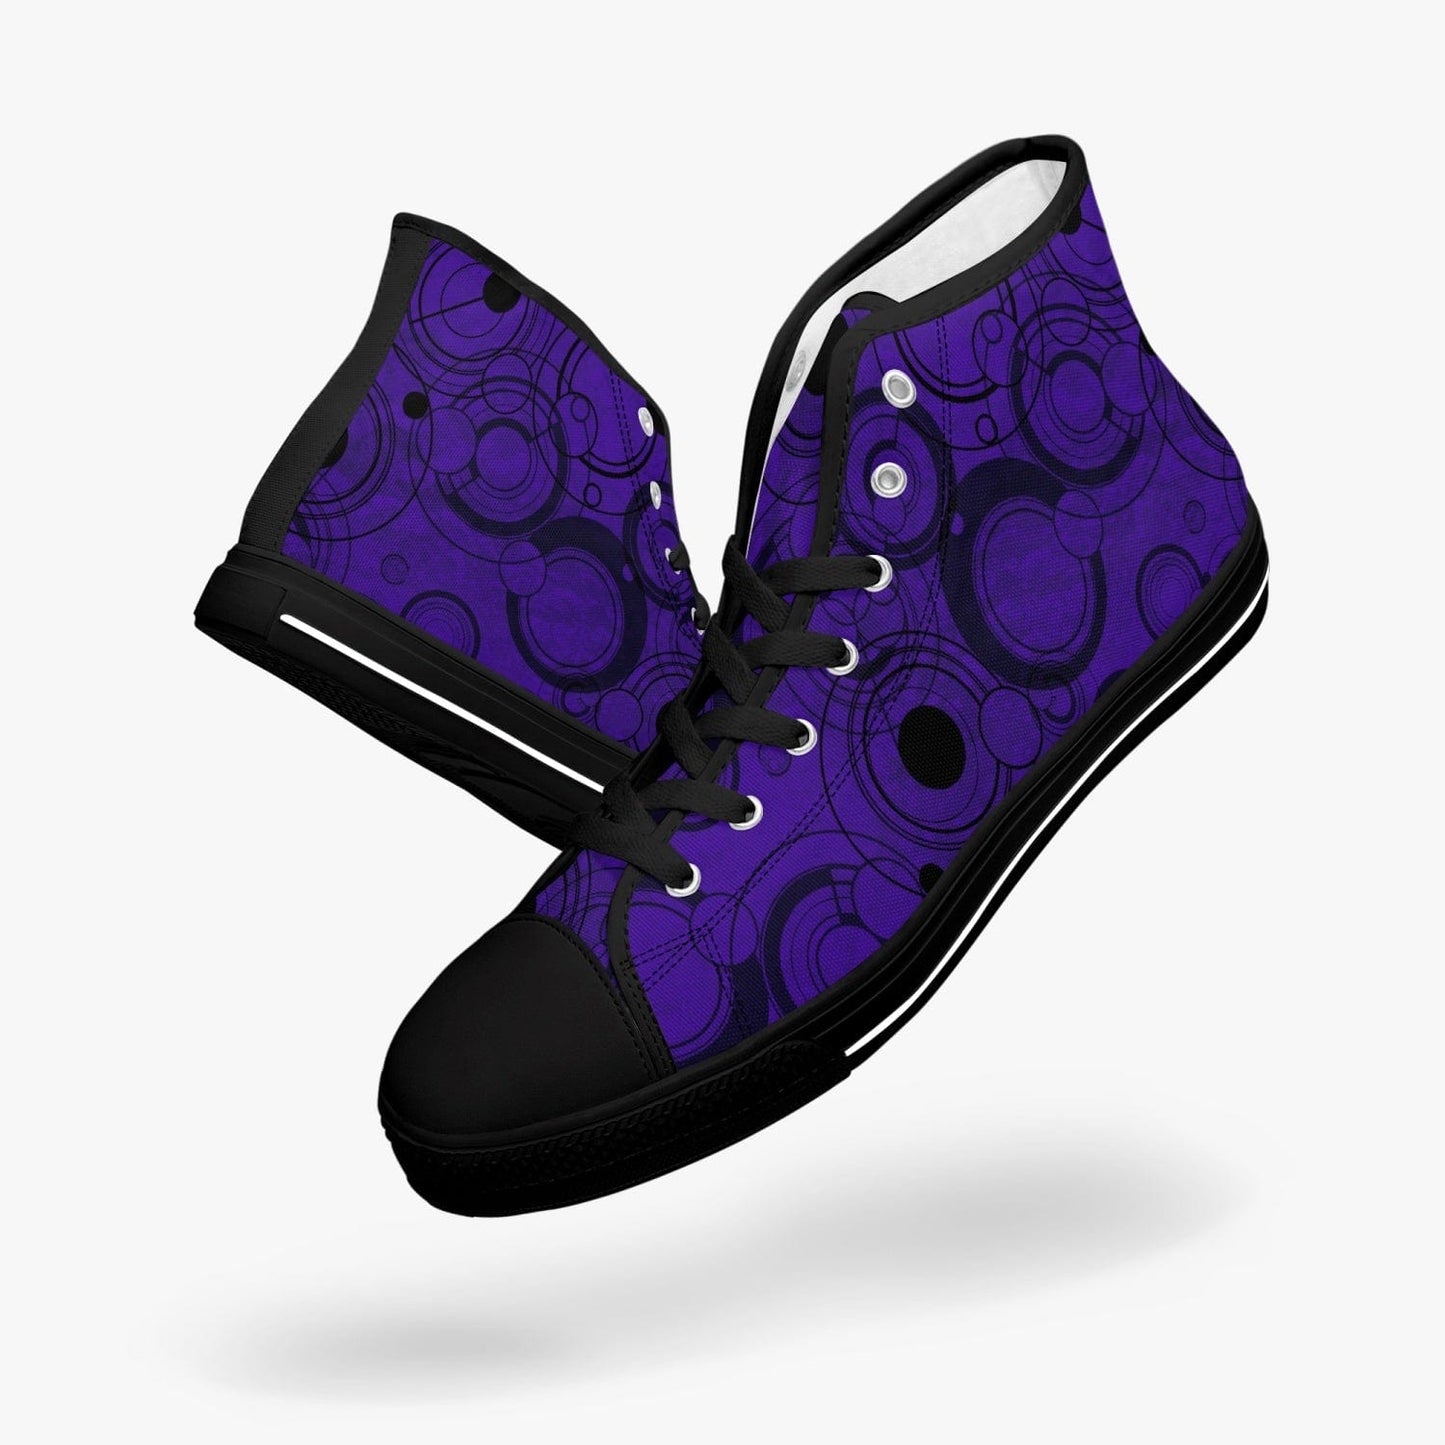 Gallifrey language high top men's sneakers in purple and black at Gallery Serpentine